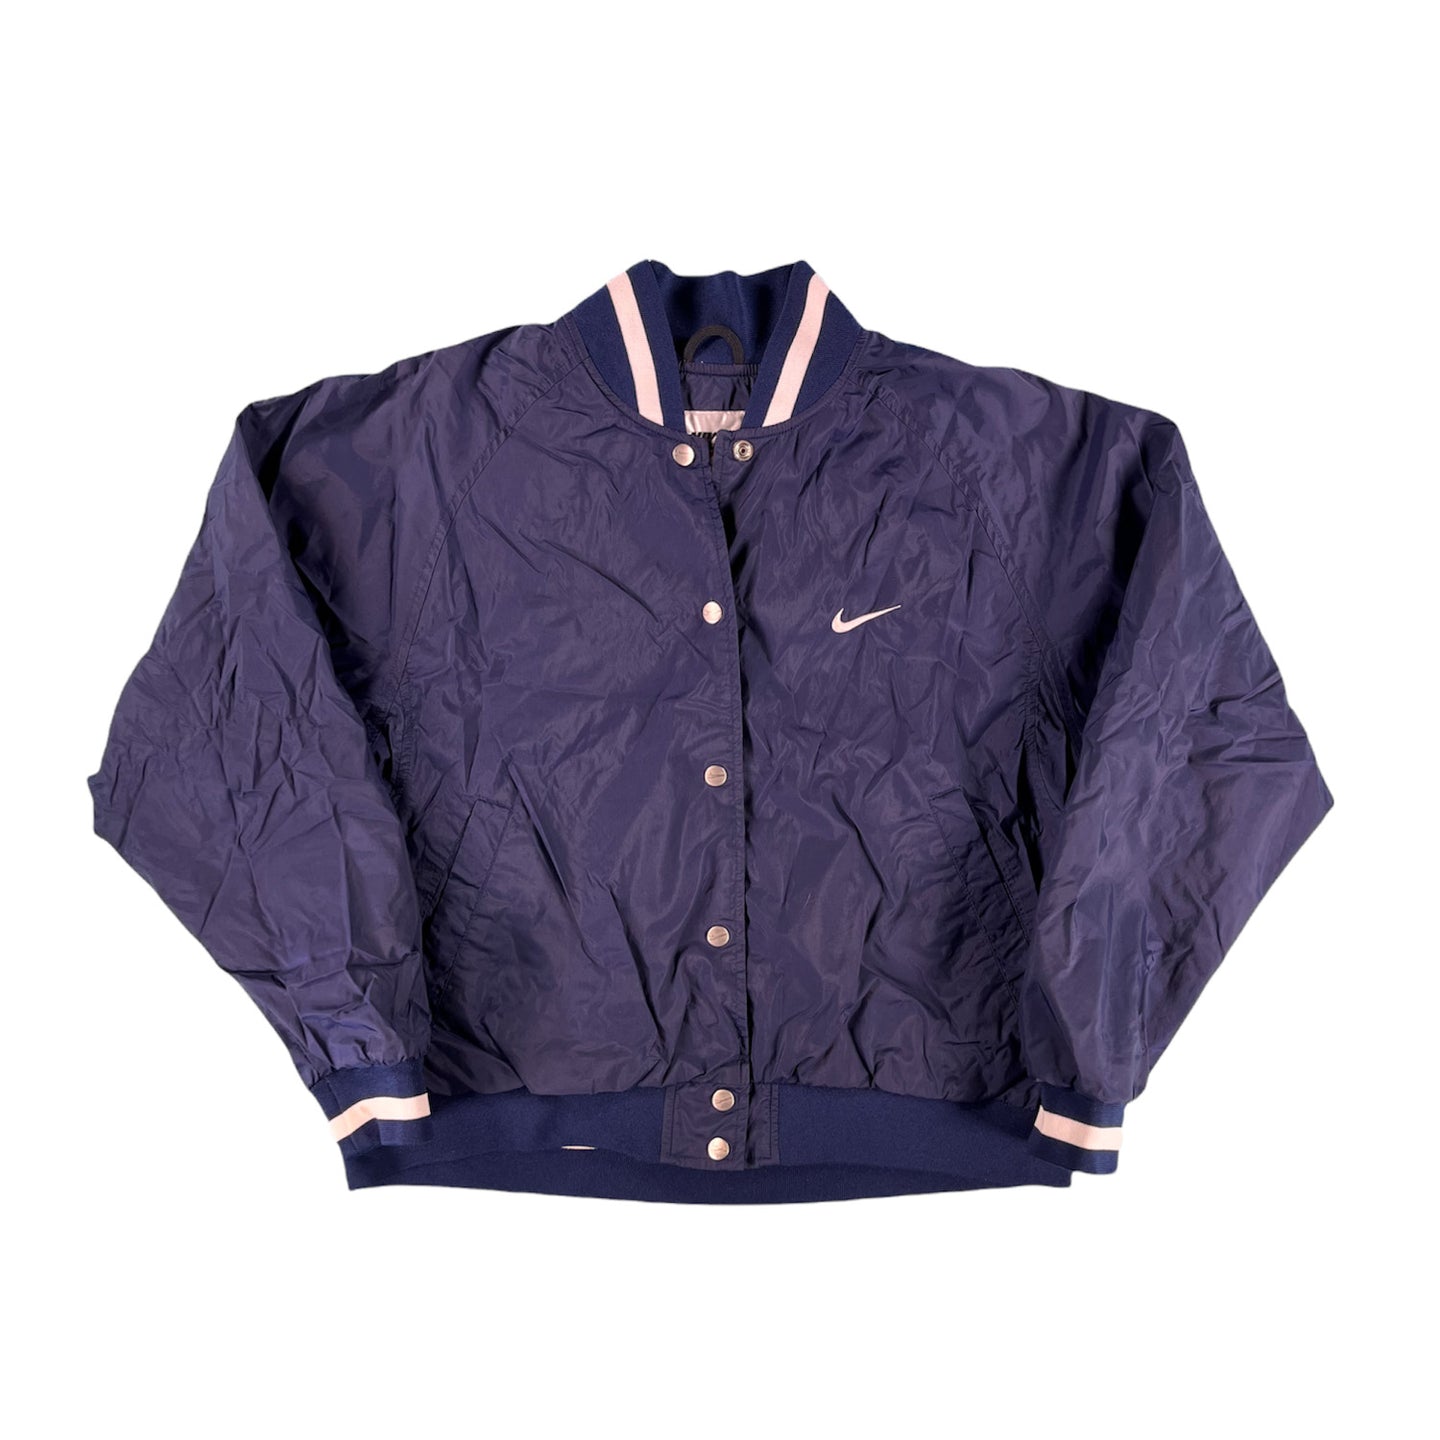 '90s Nike light bomber jacket youth L